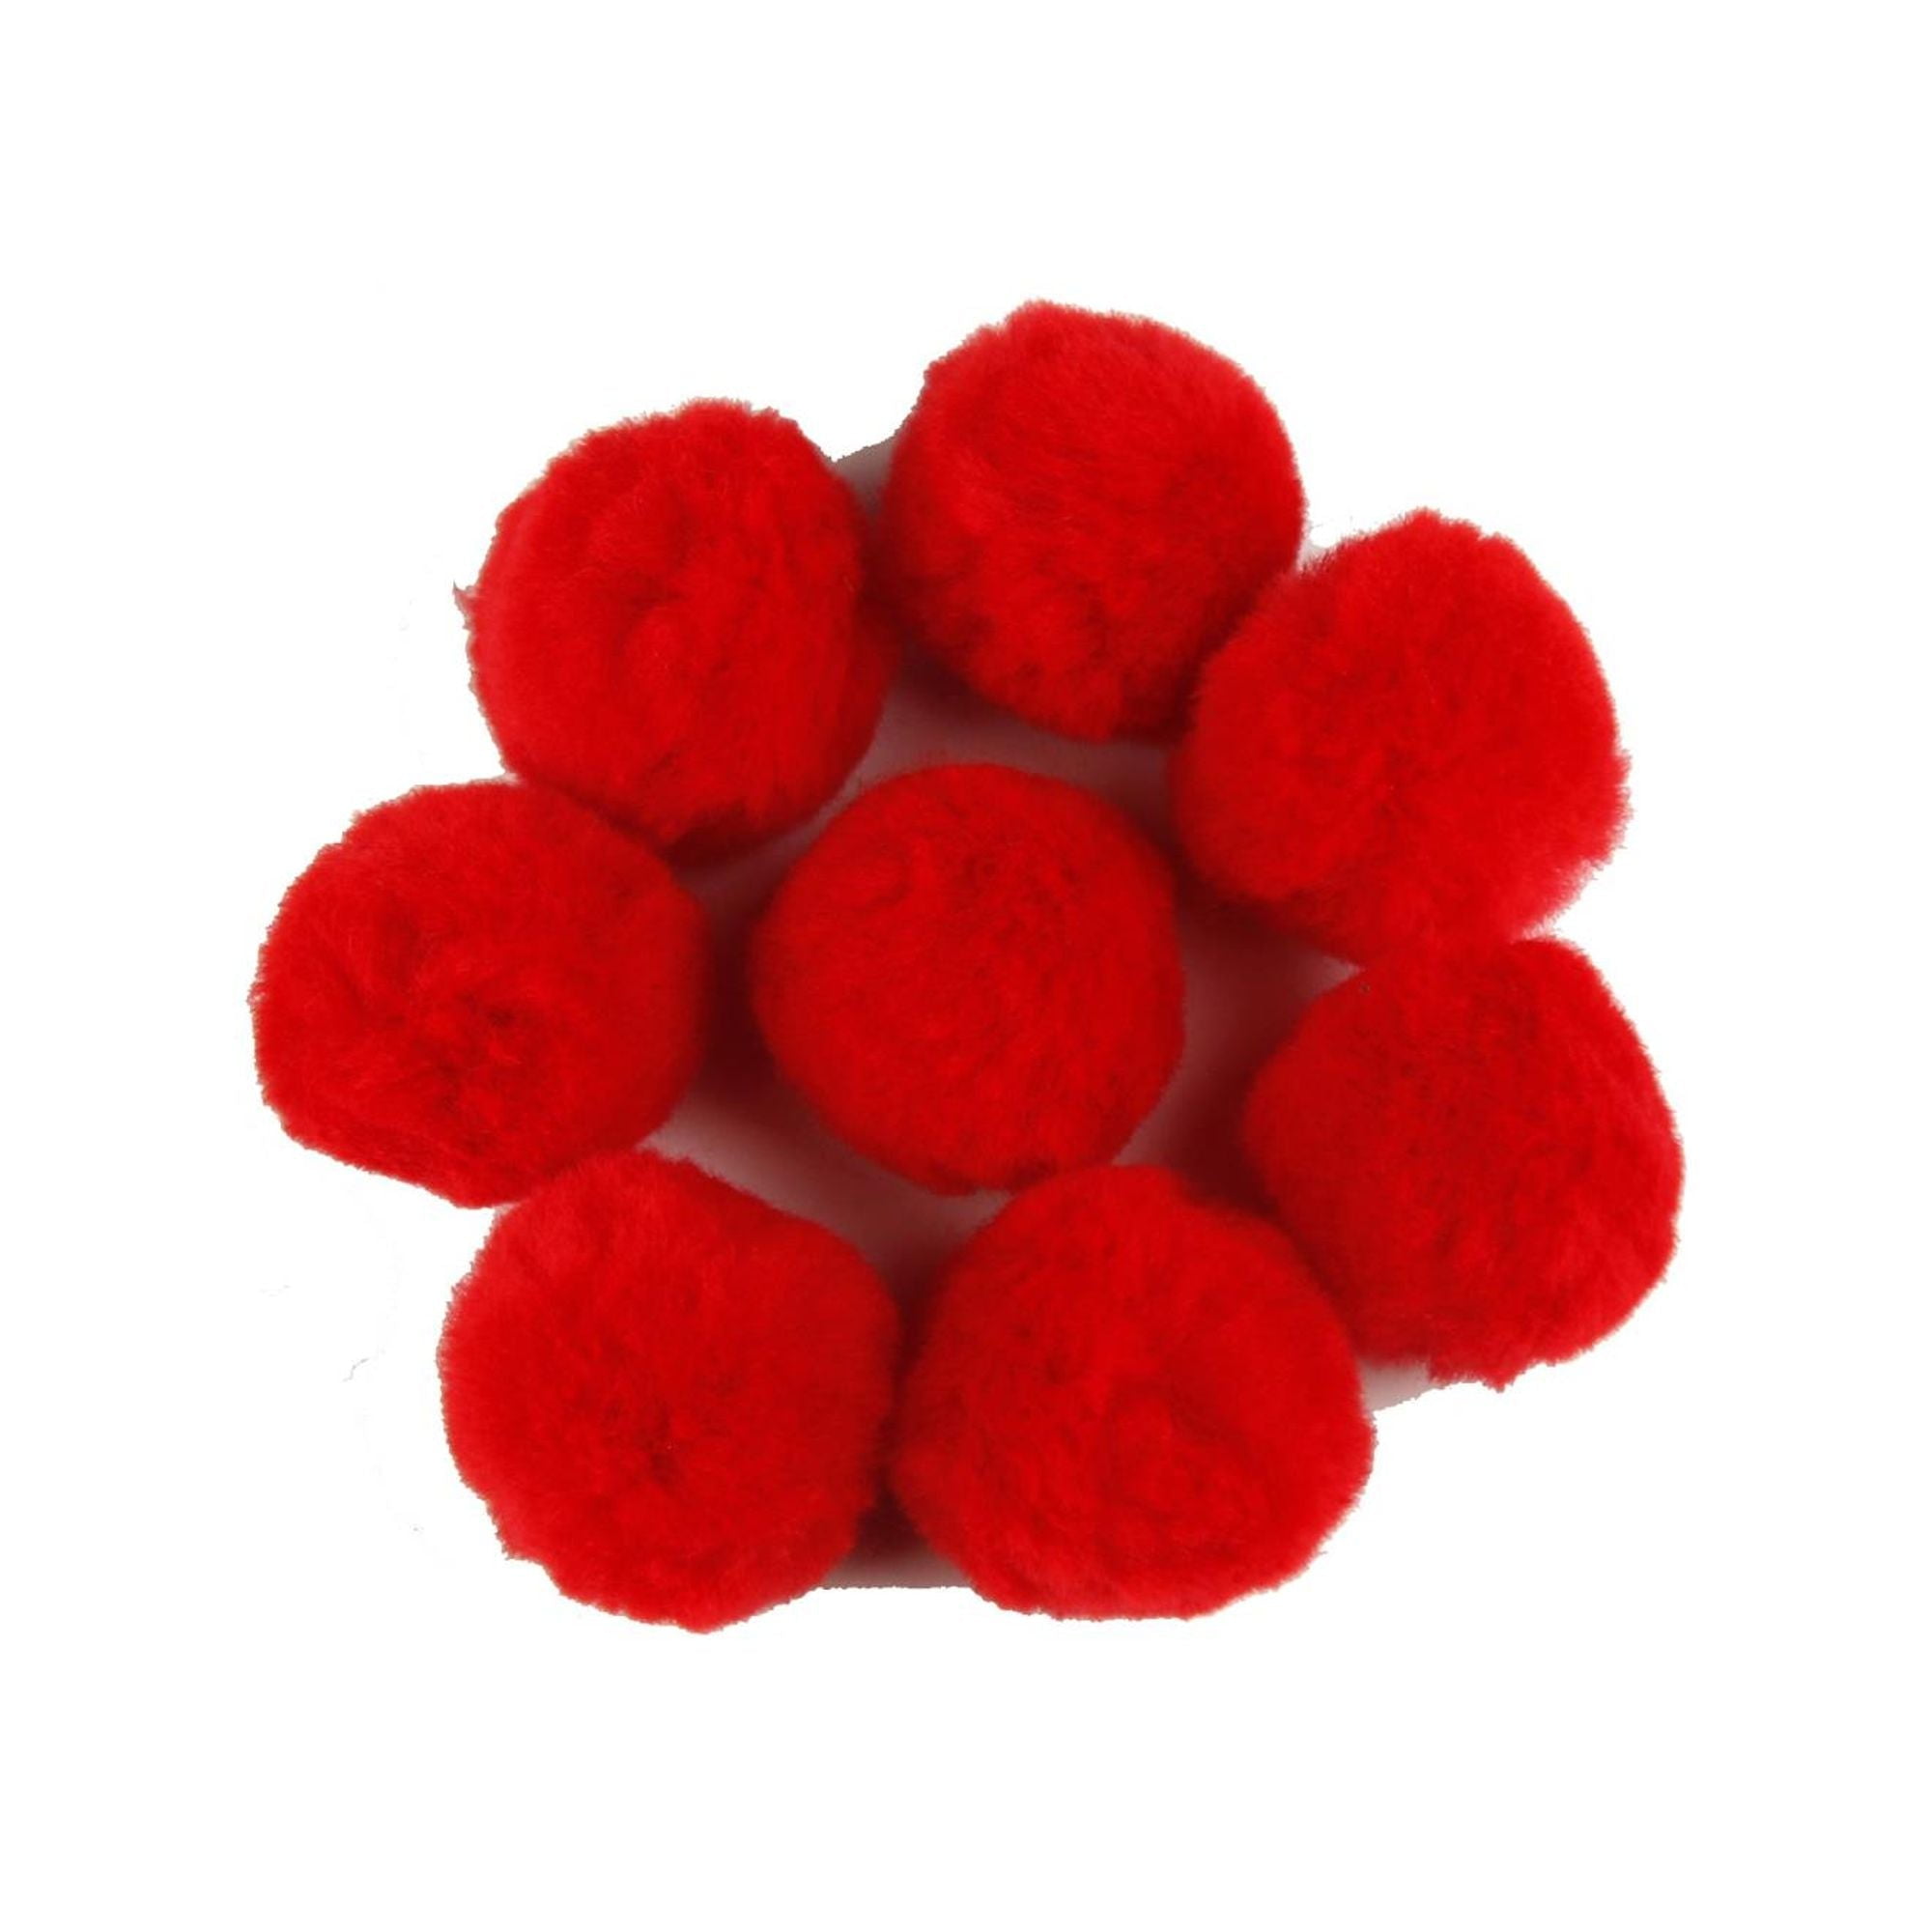 ROUND RED Craft Pom Pom Size 8MM-30MM Colours Assorted FULL SIZE RANGE  Pompoms